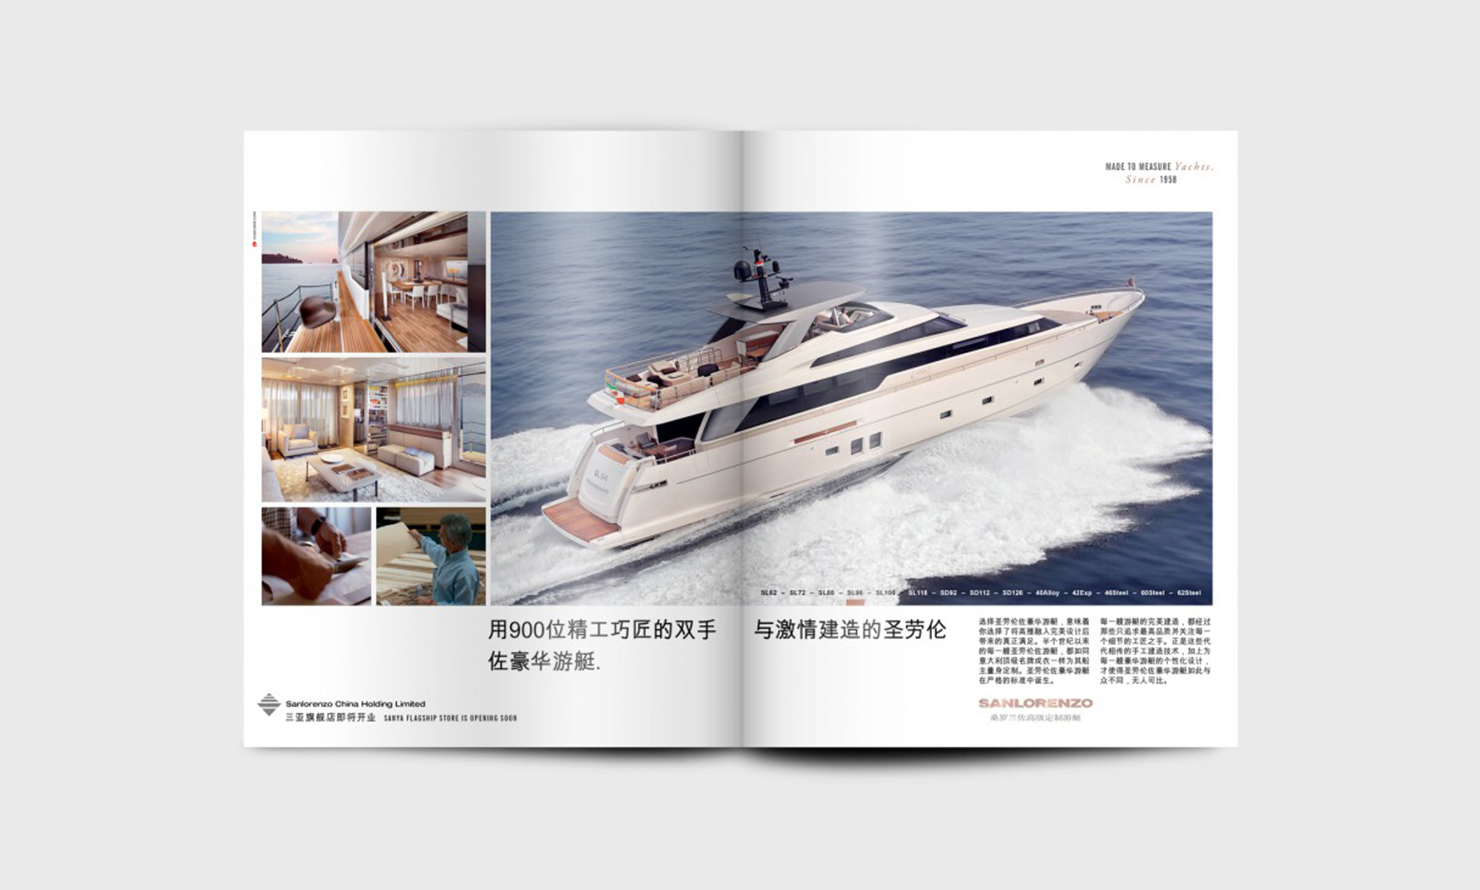 https://kubelibre.com/uploads/Slider-work-tutti-clienti/sanlorenzo-yacht-made-to-measure-yacht-since-1958-3.jpg